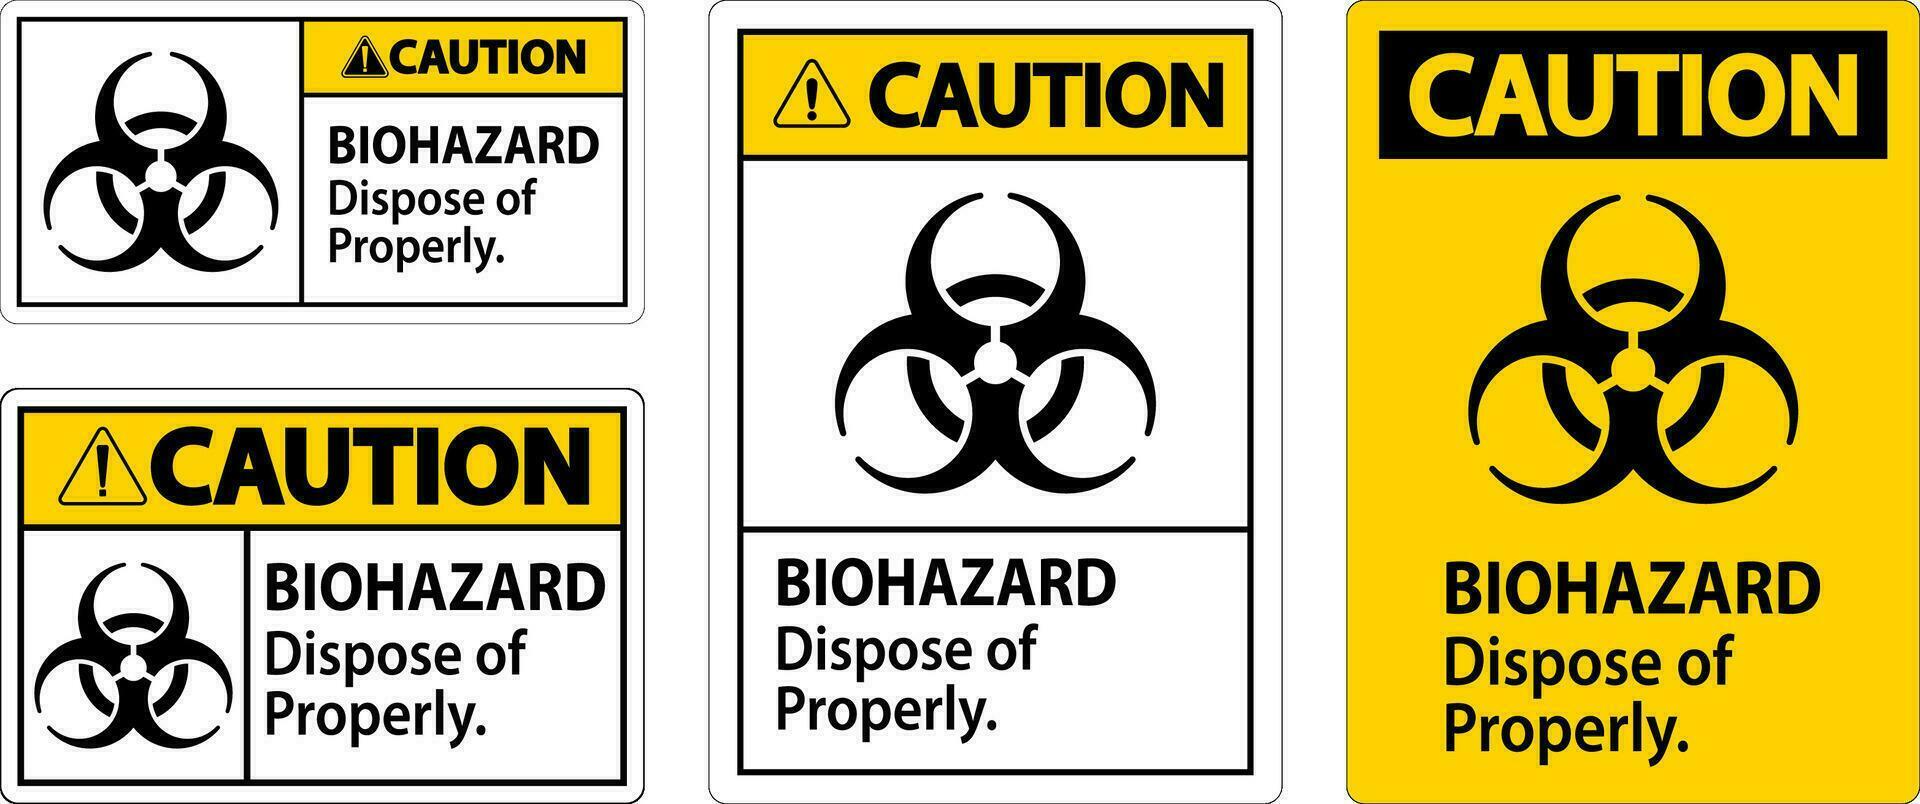 peligro biológico precaución etiqueta peligro biológico disponer de correctamente vector